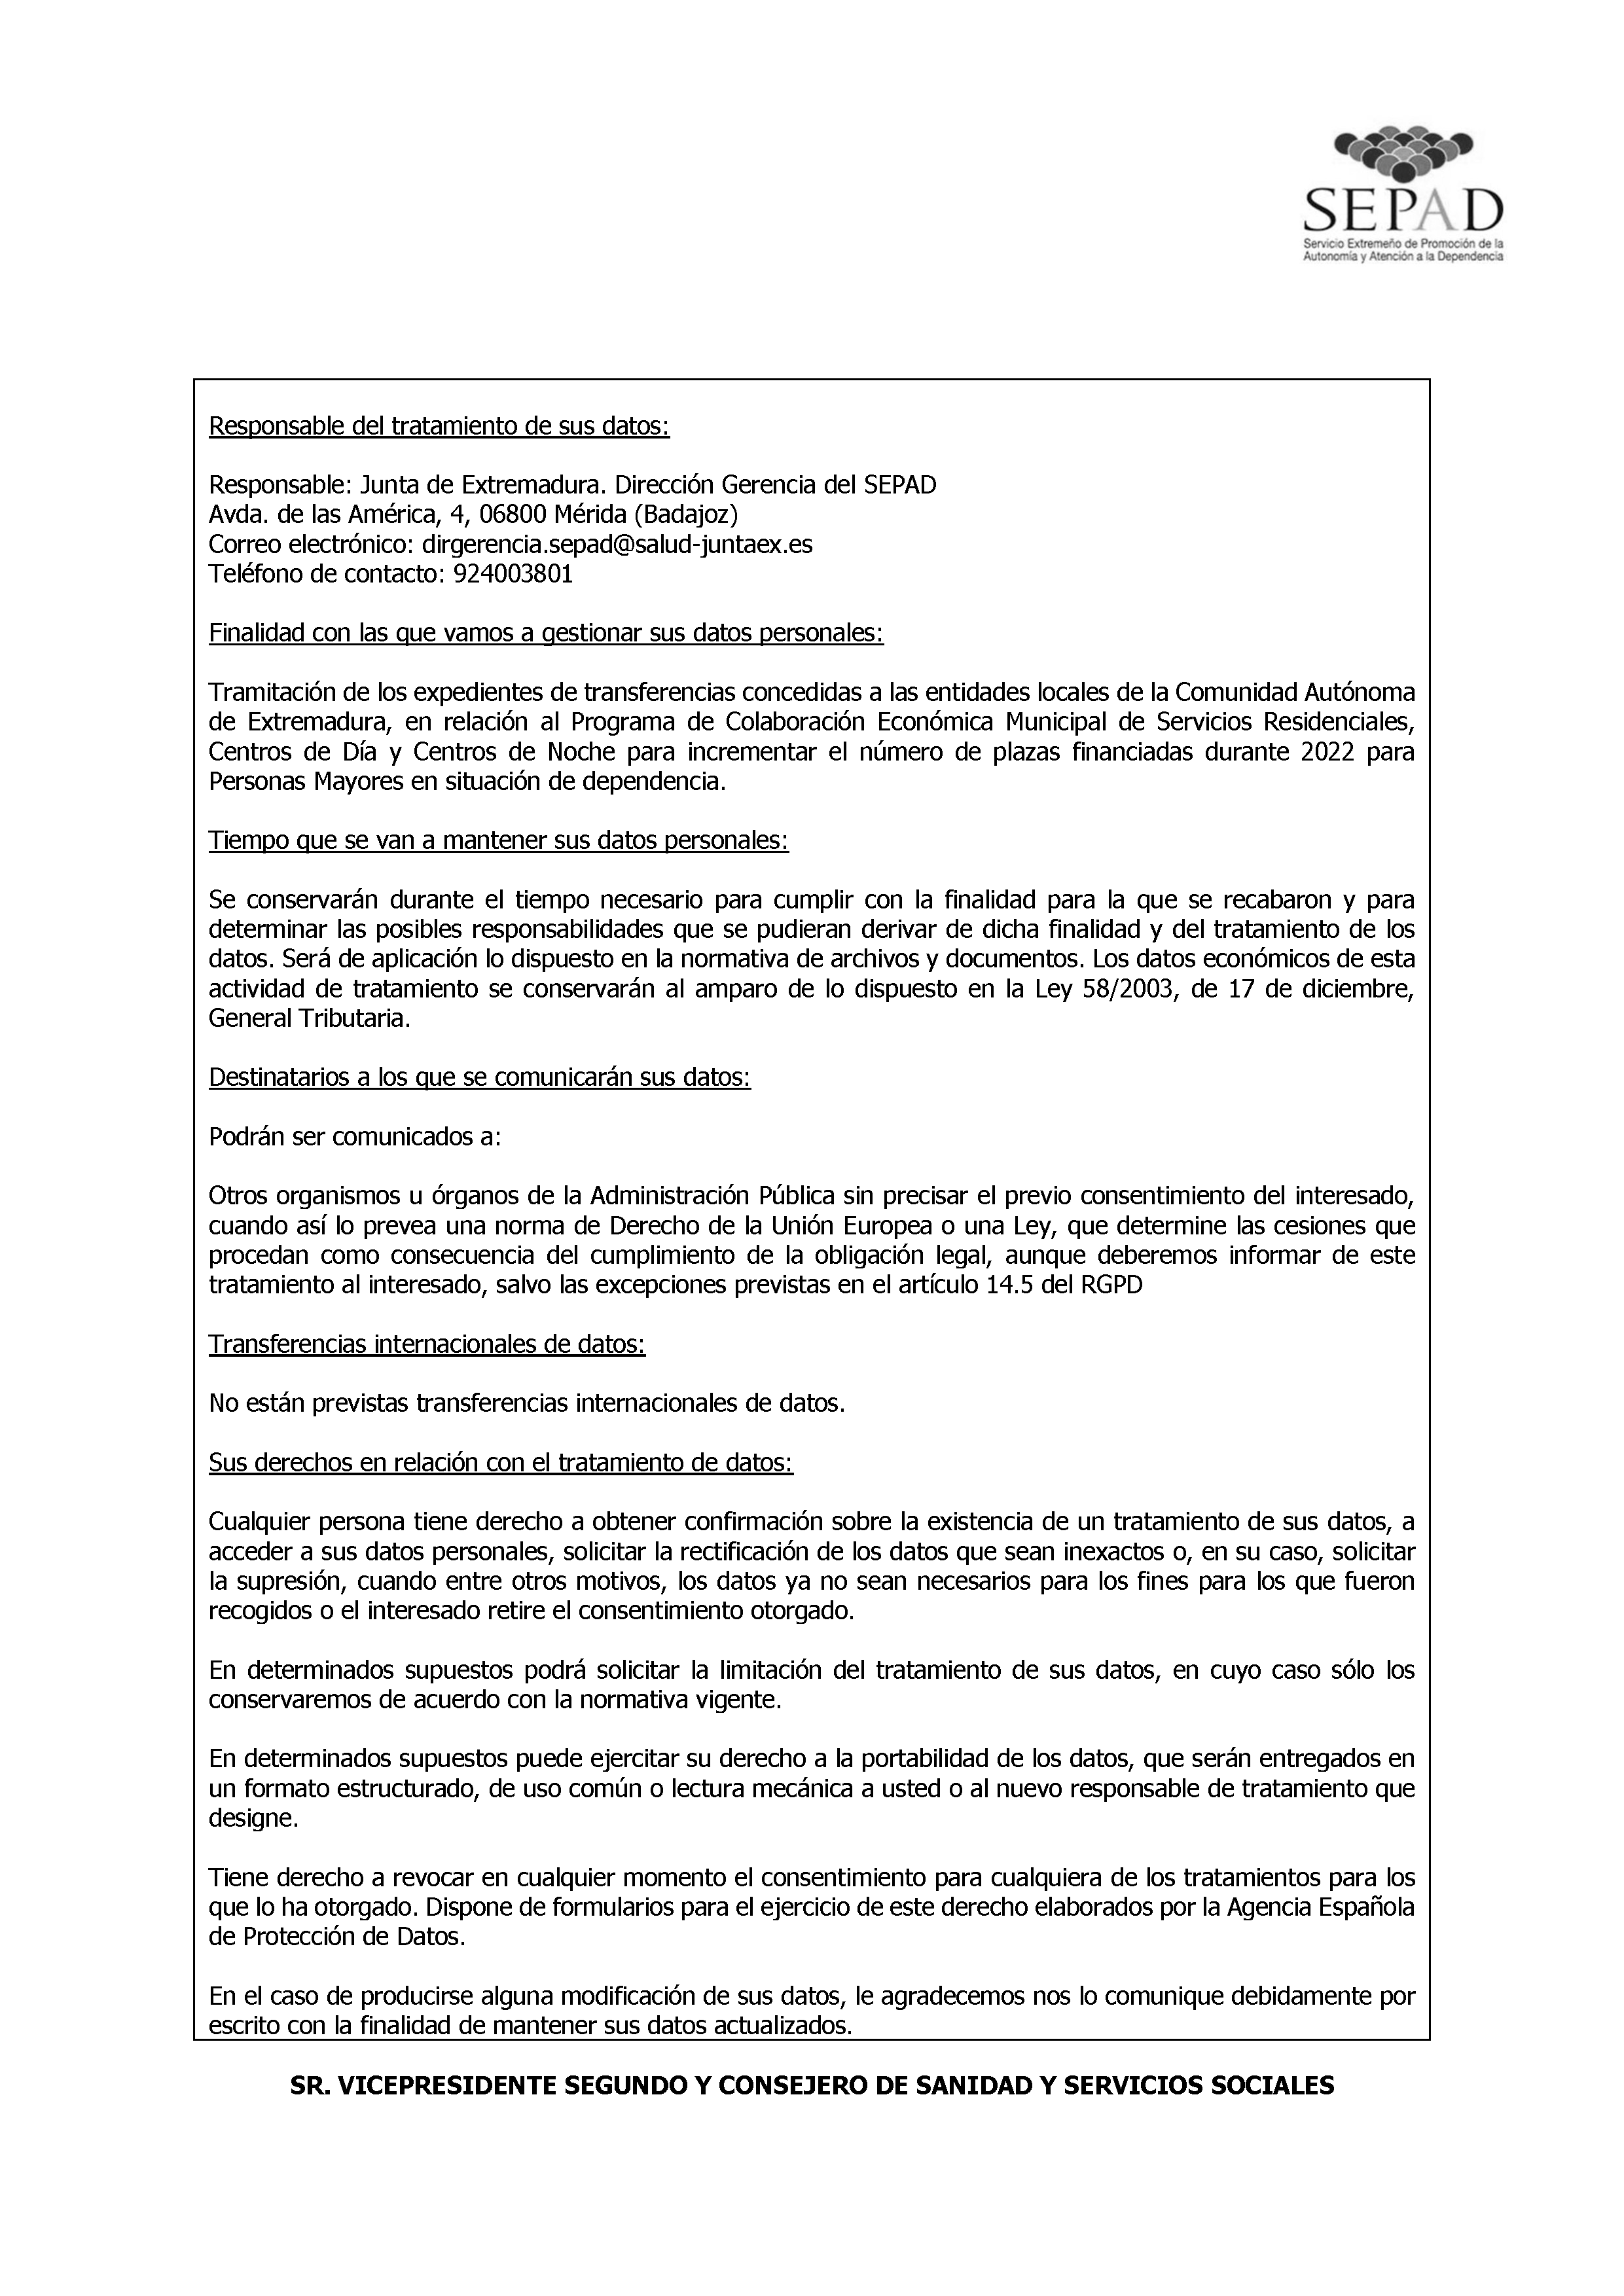 ANEXO I - PROGRAMA DE COLABORACION ECONOMICA MUNICIPAL Pag 9